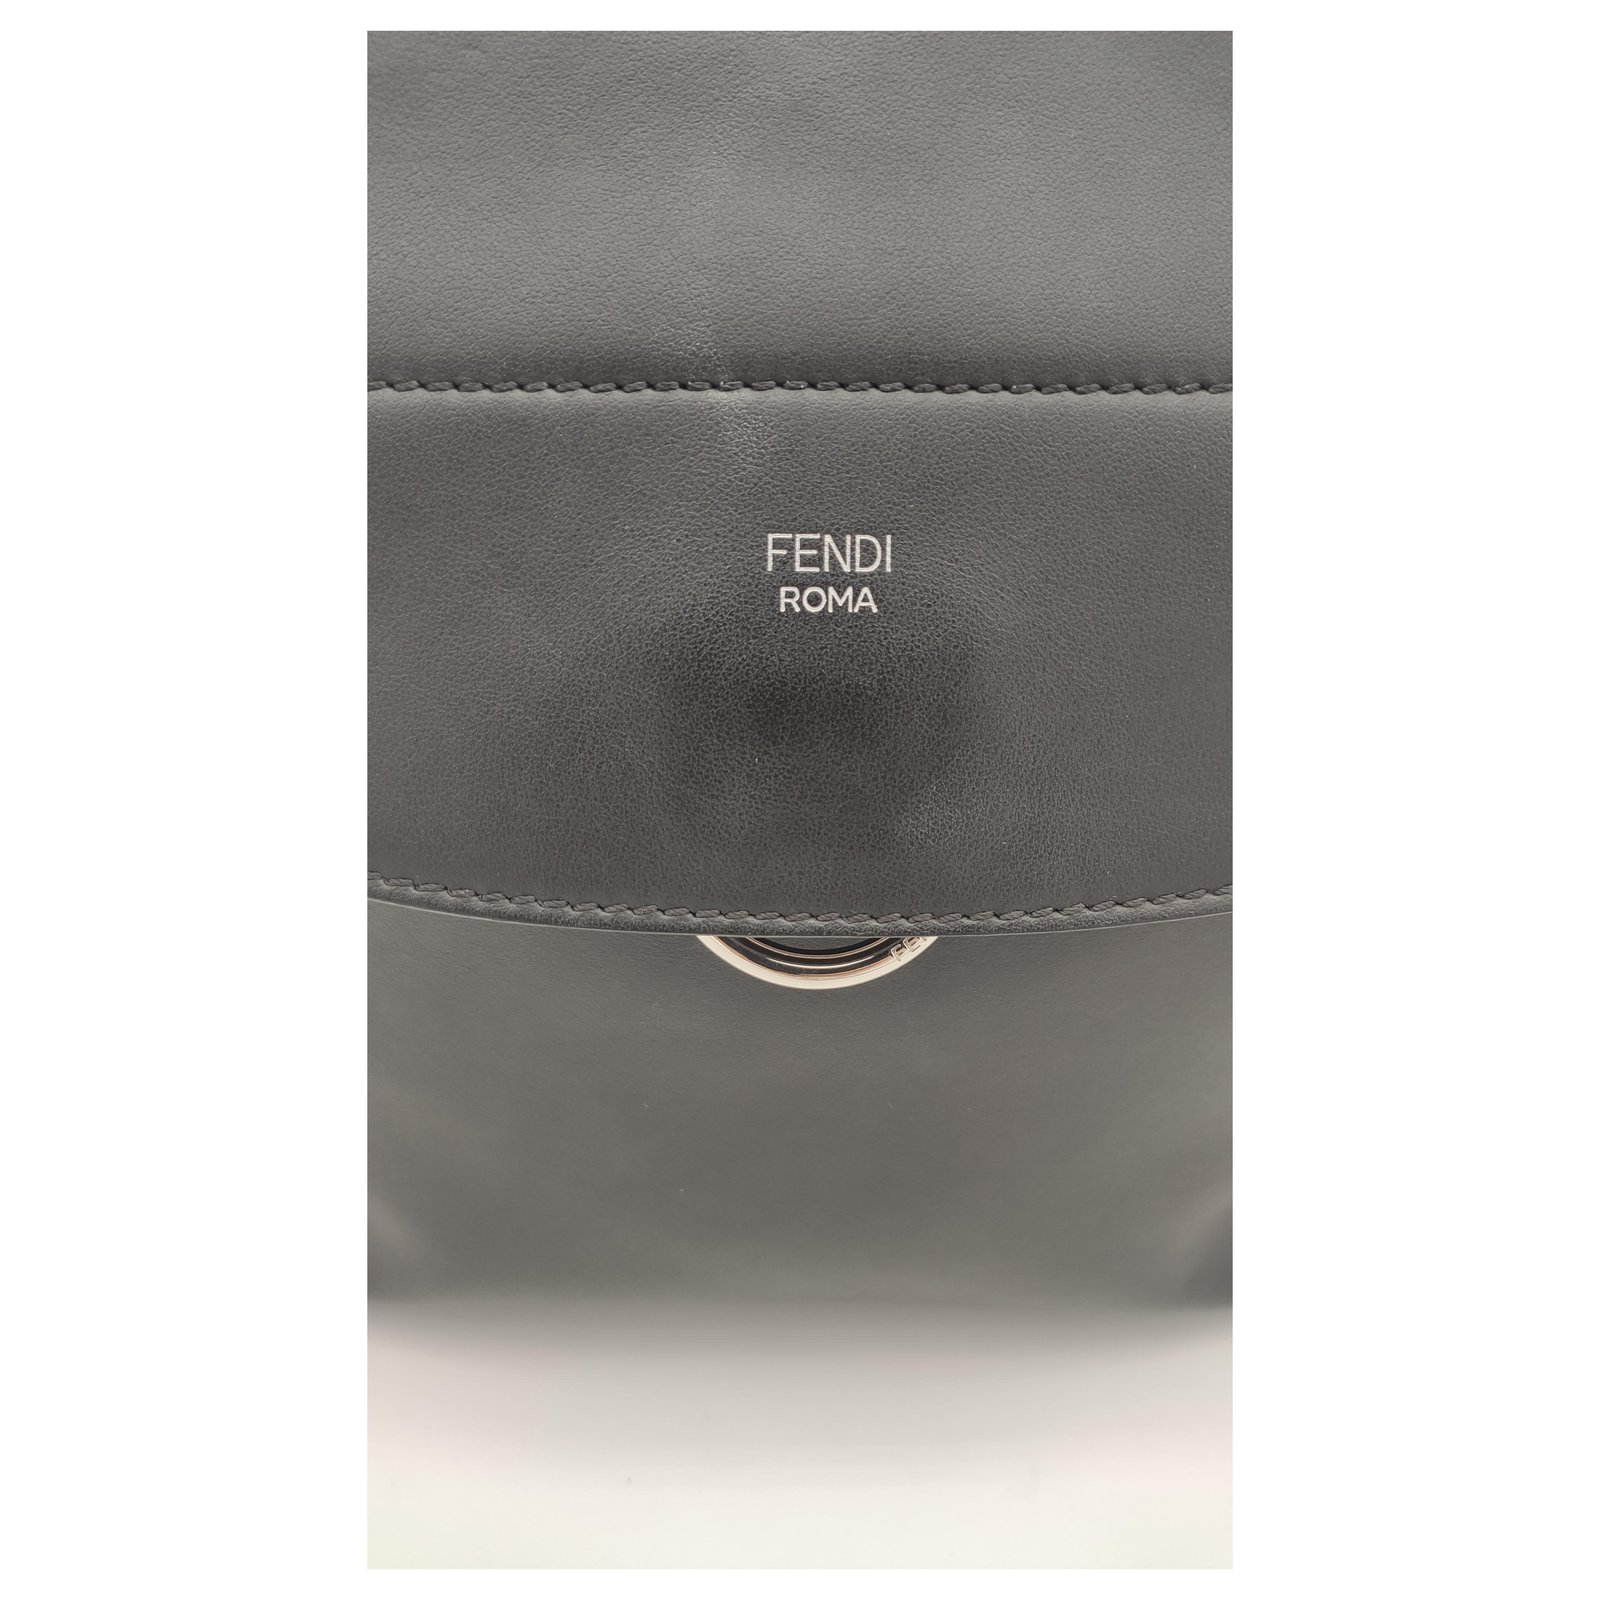 Back to school leather handbag Fendi Black in Leather - 25086966